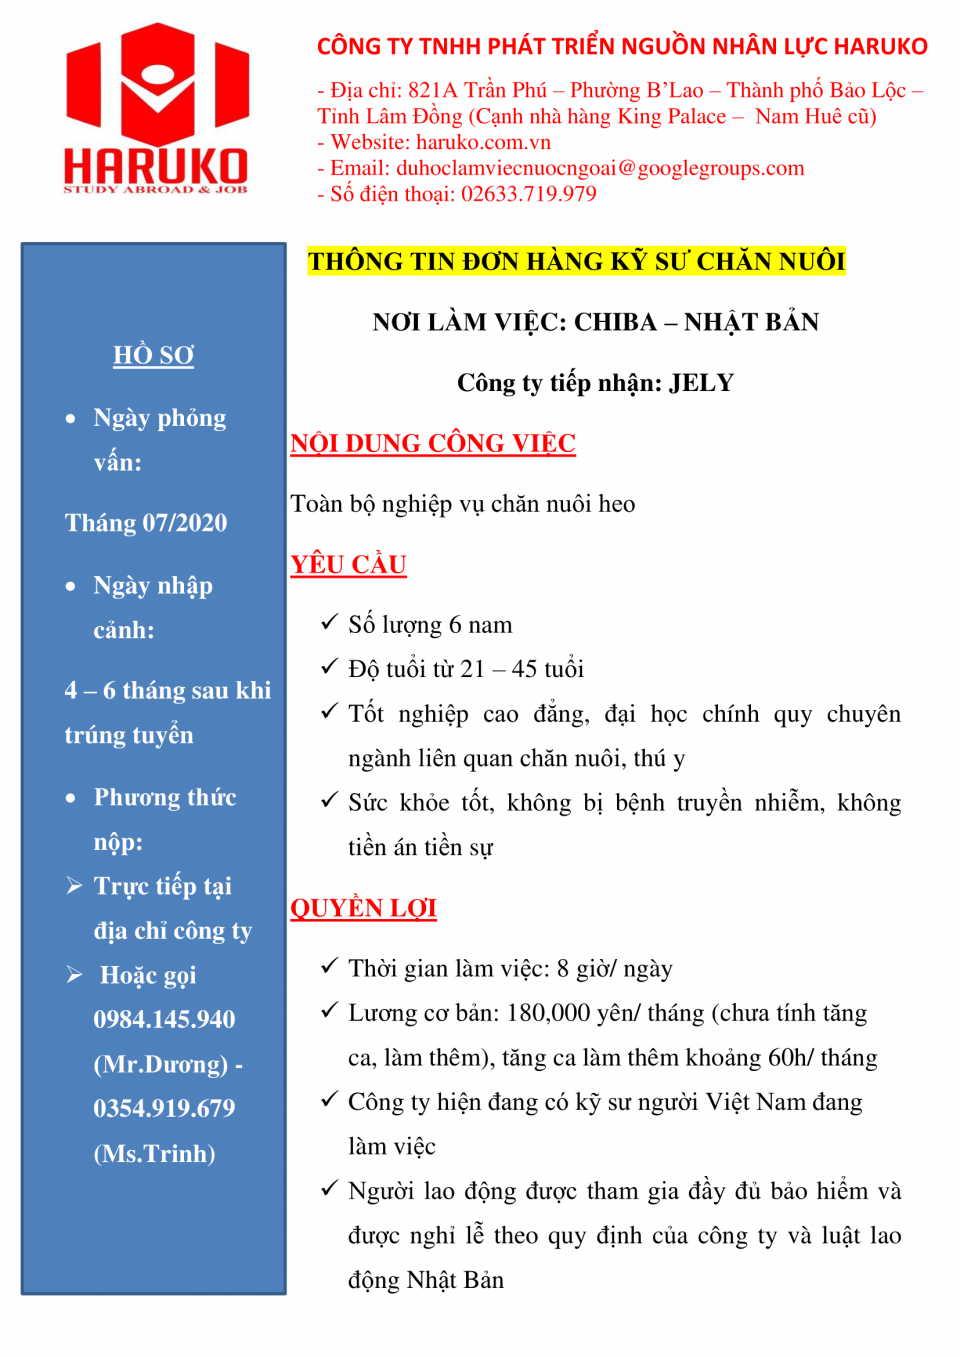 KS CHAN NUOI HEO-1.png